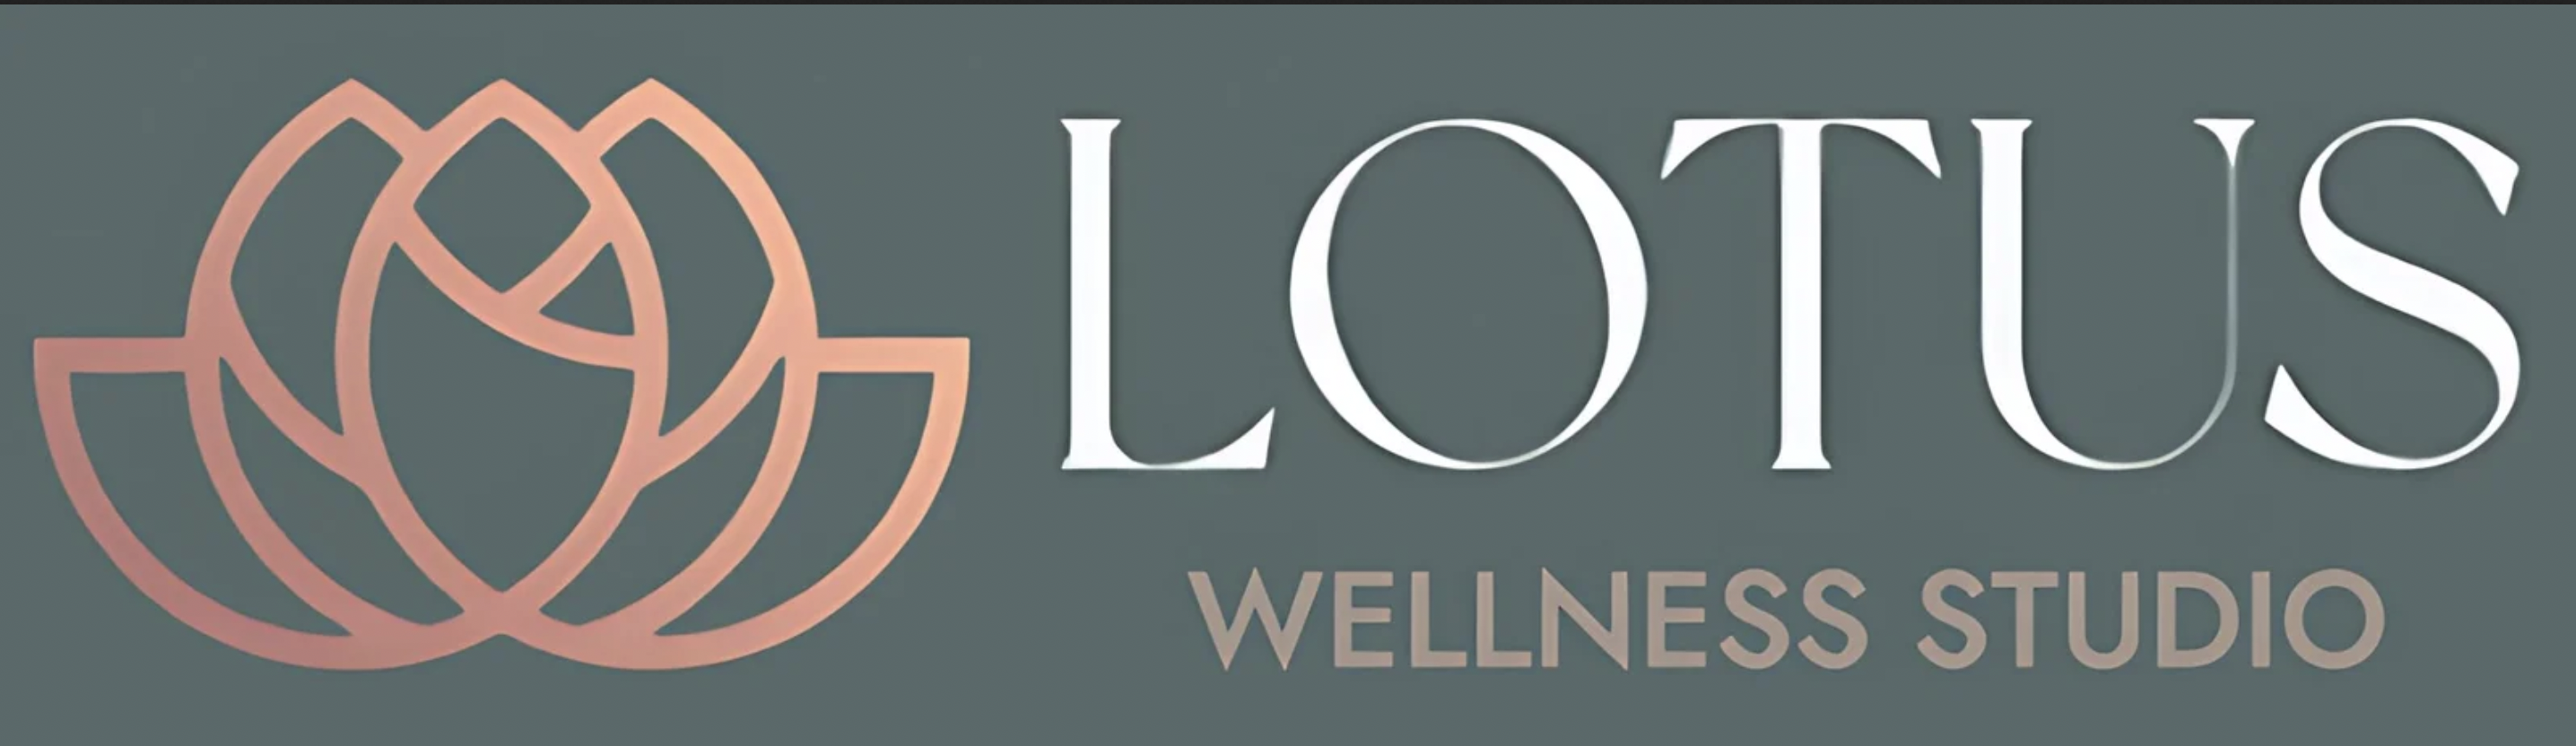 LOTUS WELLNESS STUDIO logo